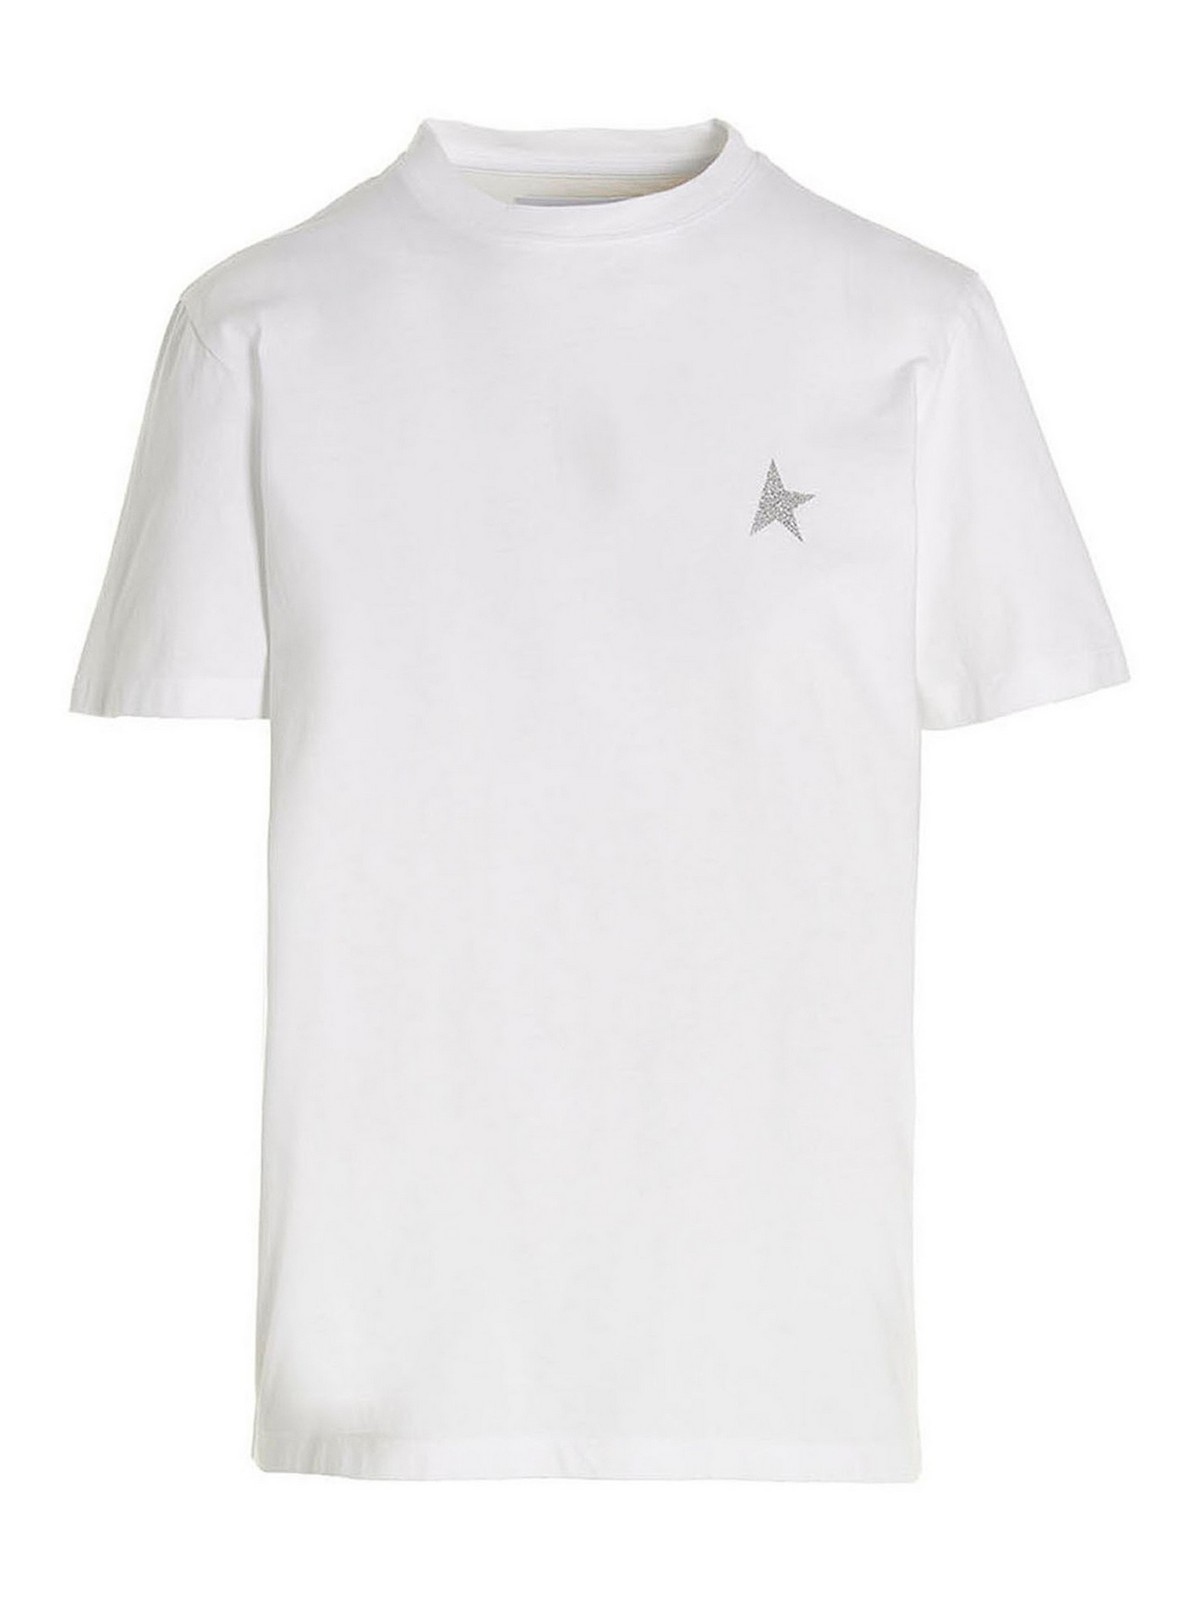 Golden Goose Small Star T-shirt In White